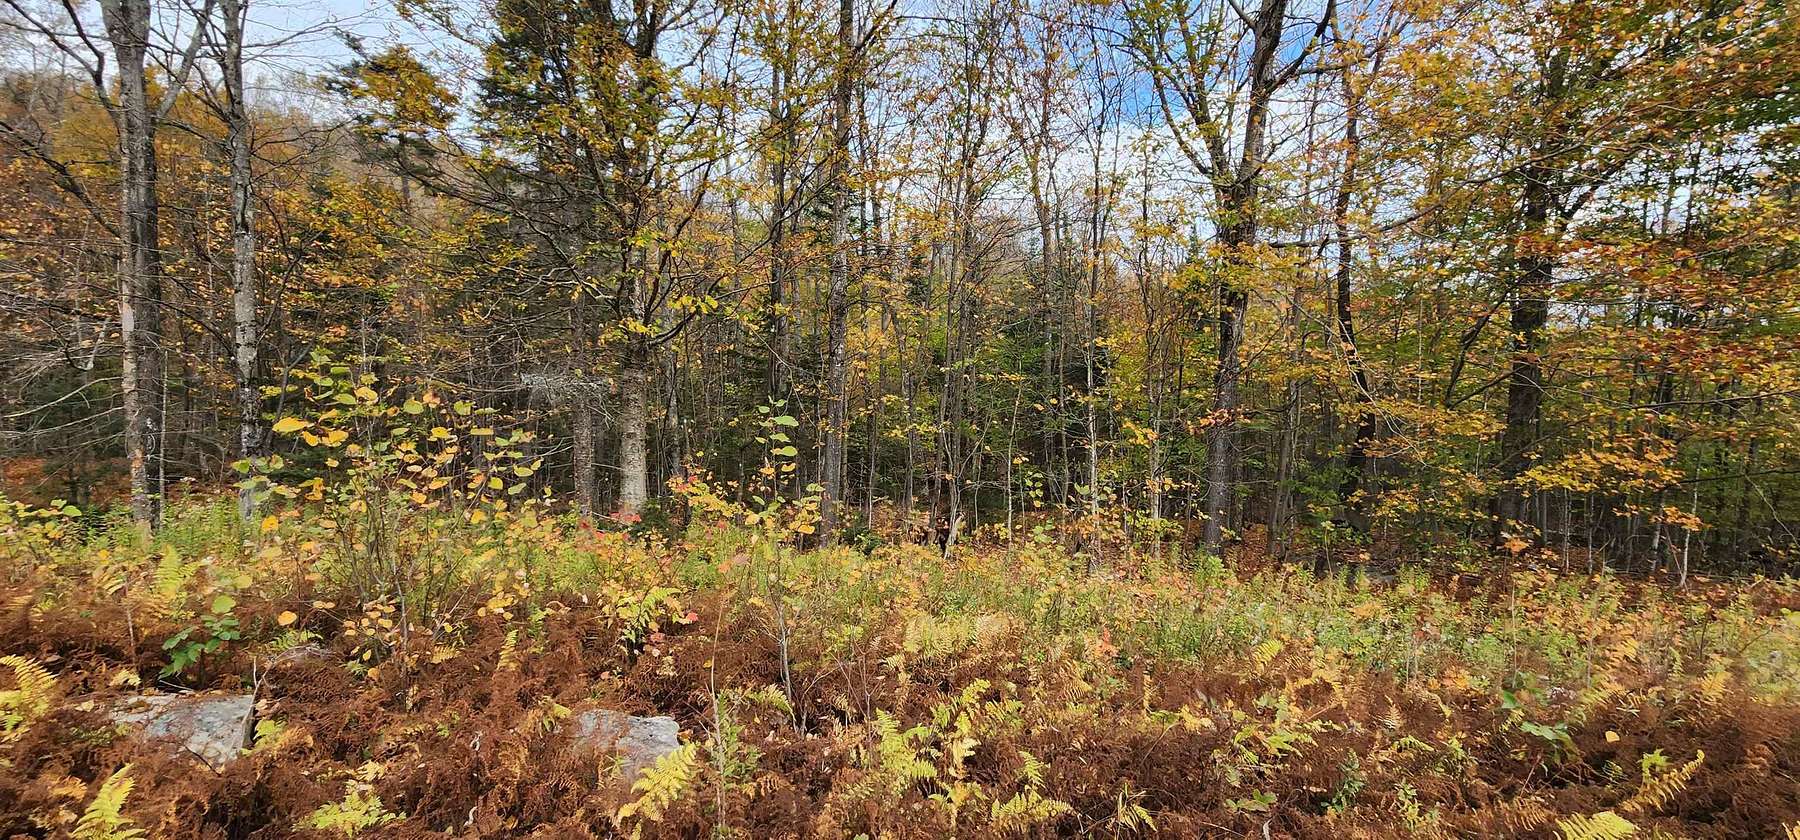 112 Acres of Land for Sale in Orange, Vermont